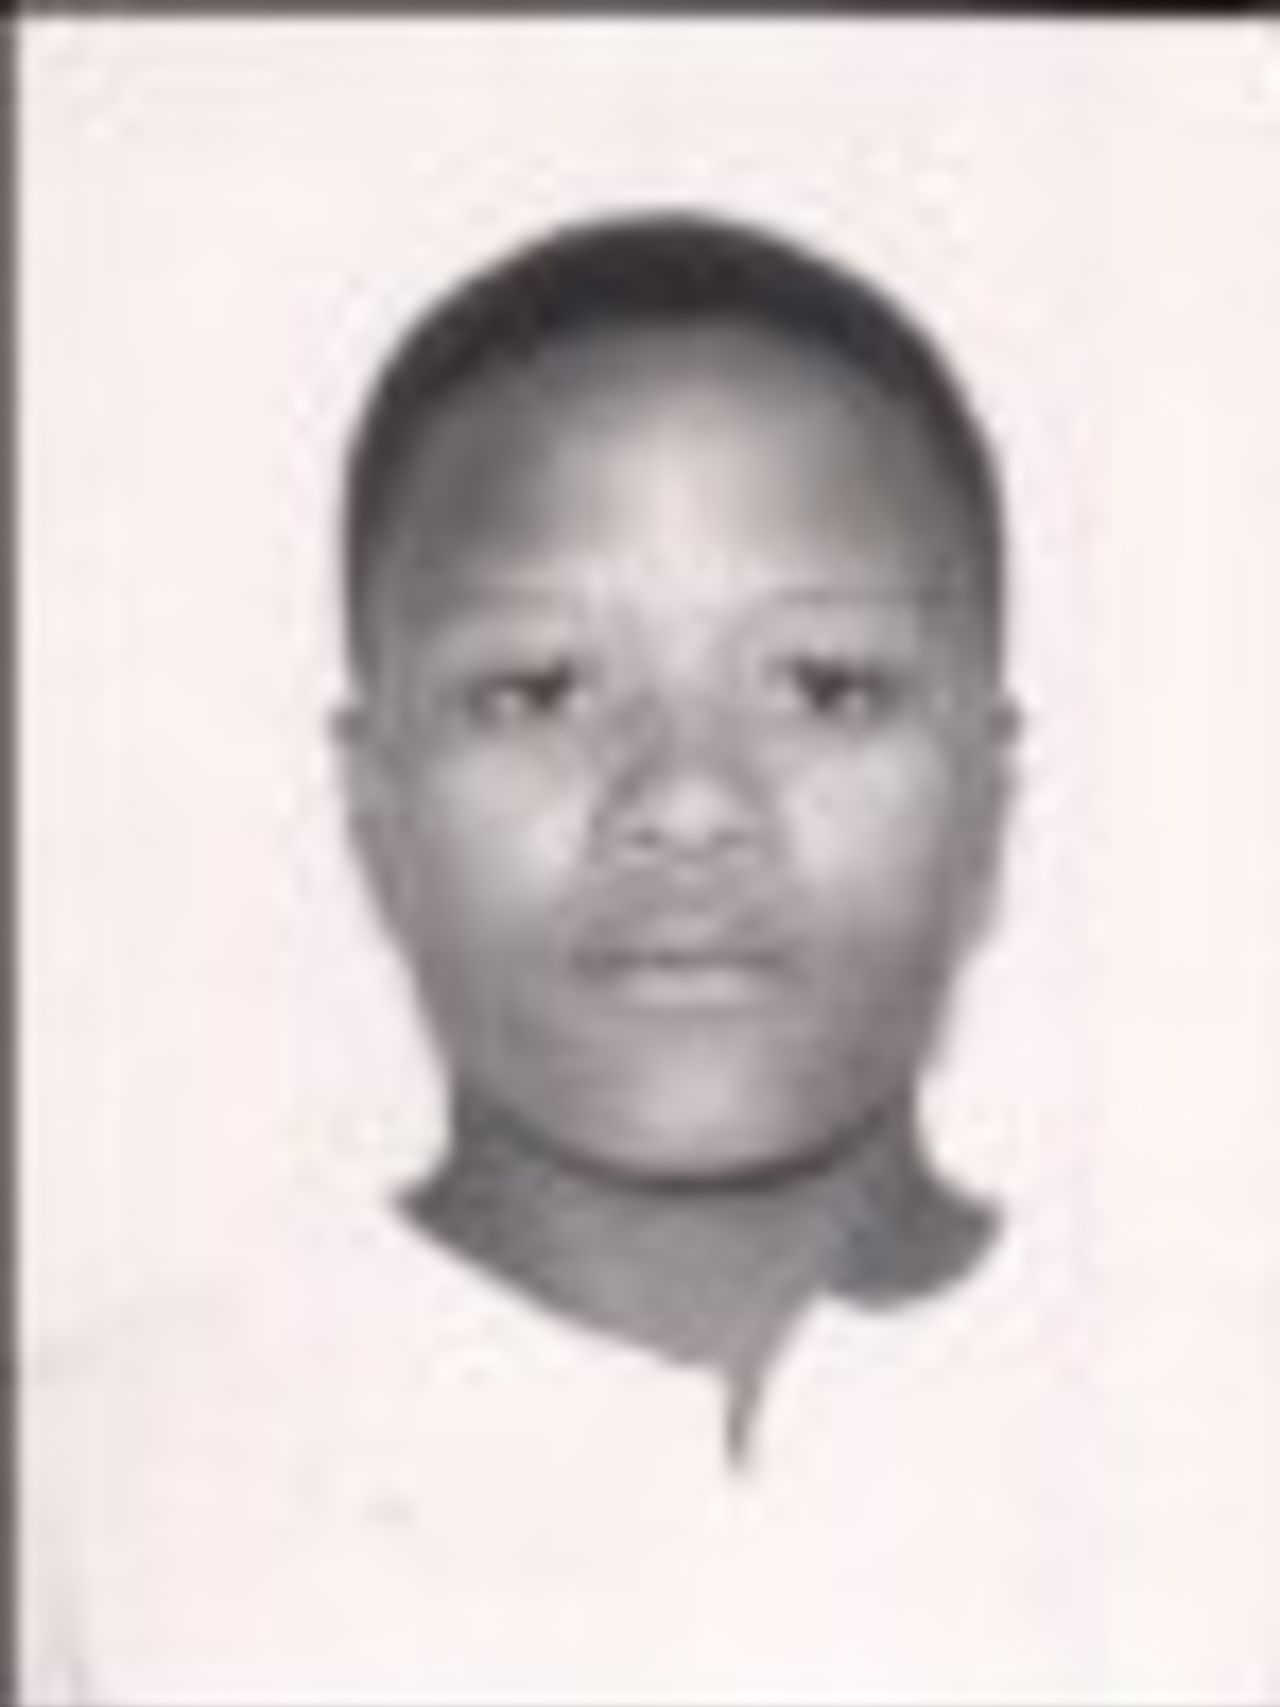 Passport picture of Nolubabalo Ndzundzu